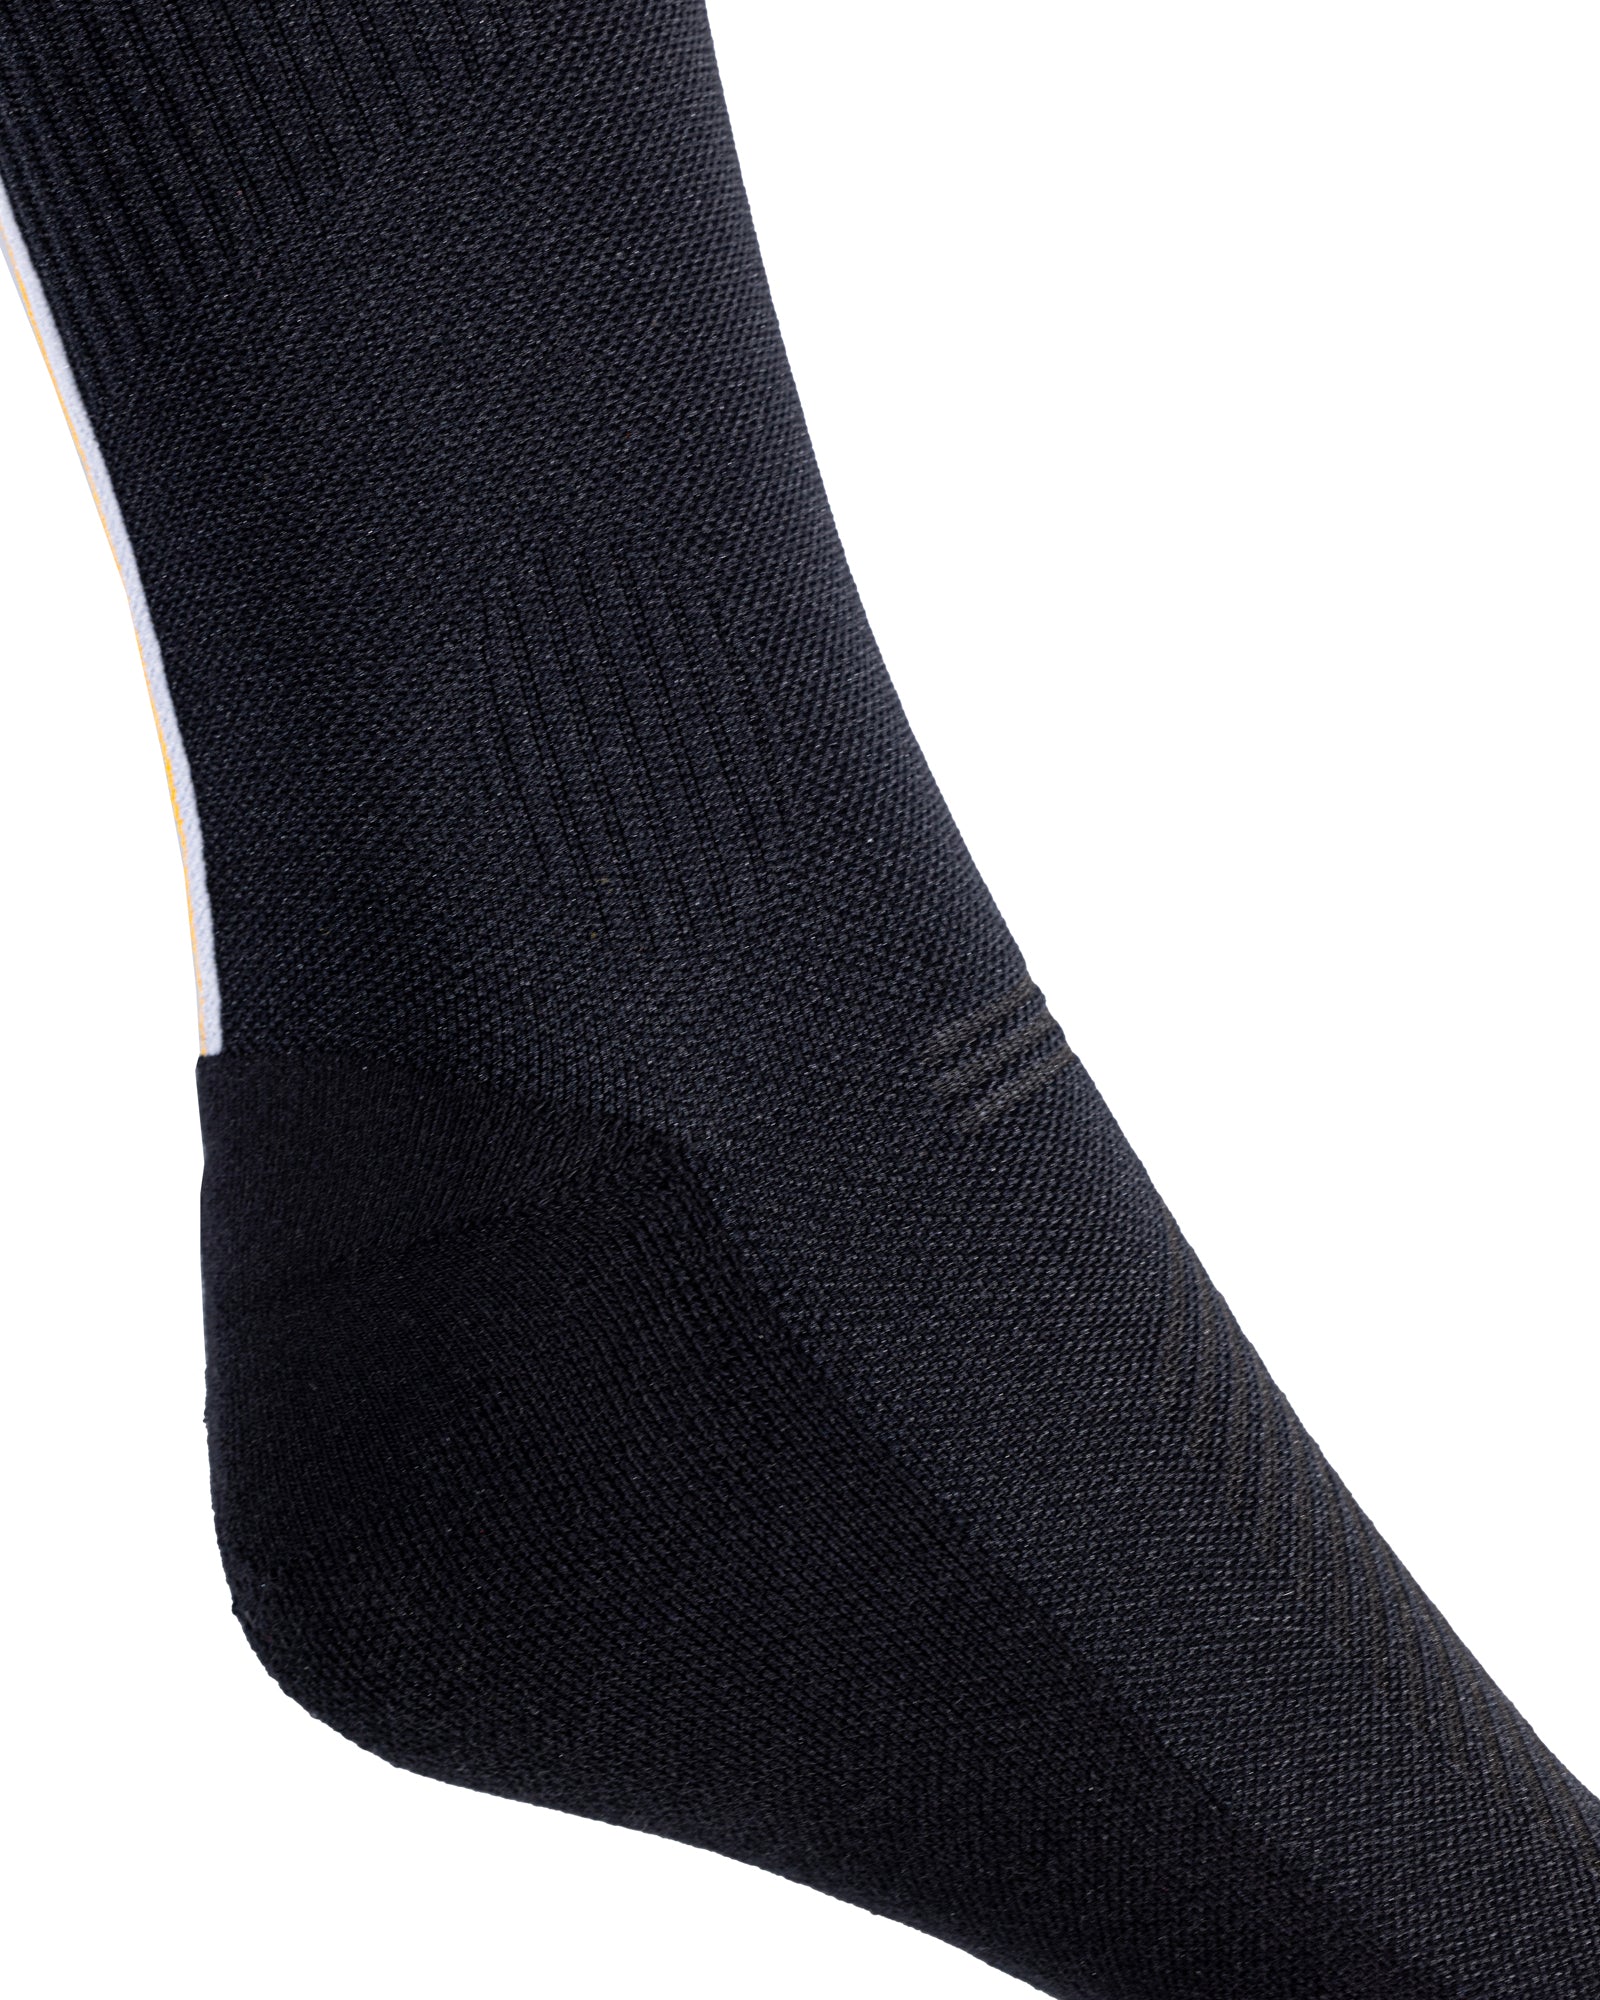 Knee High Compression Socks